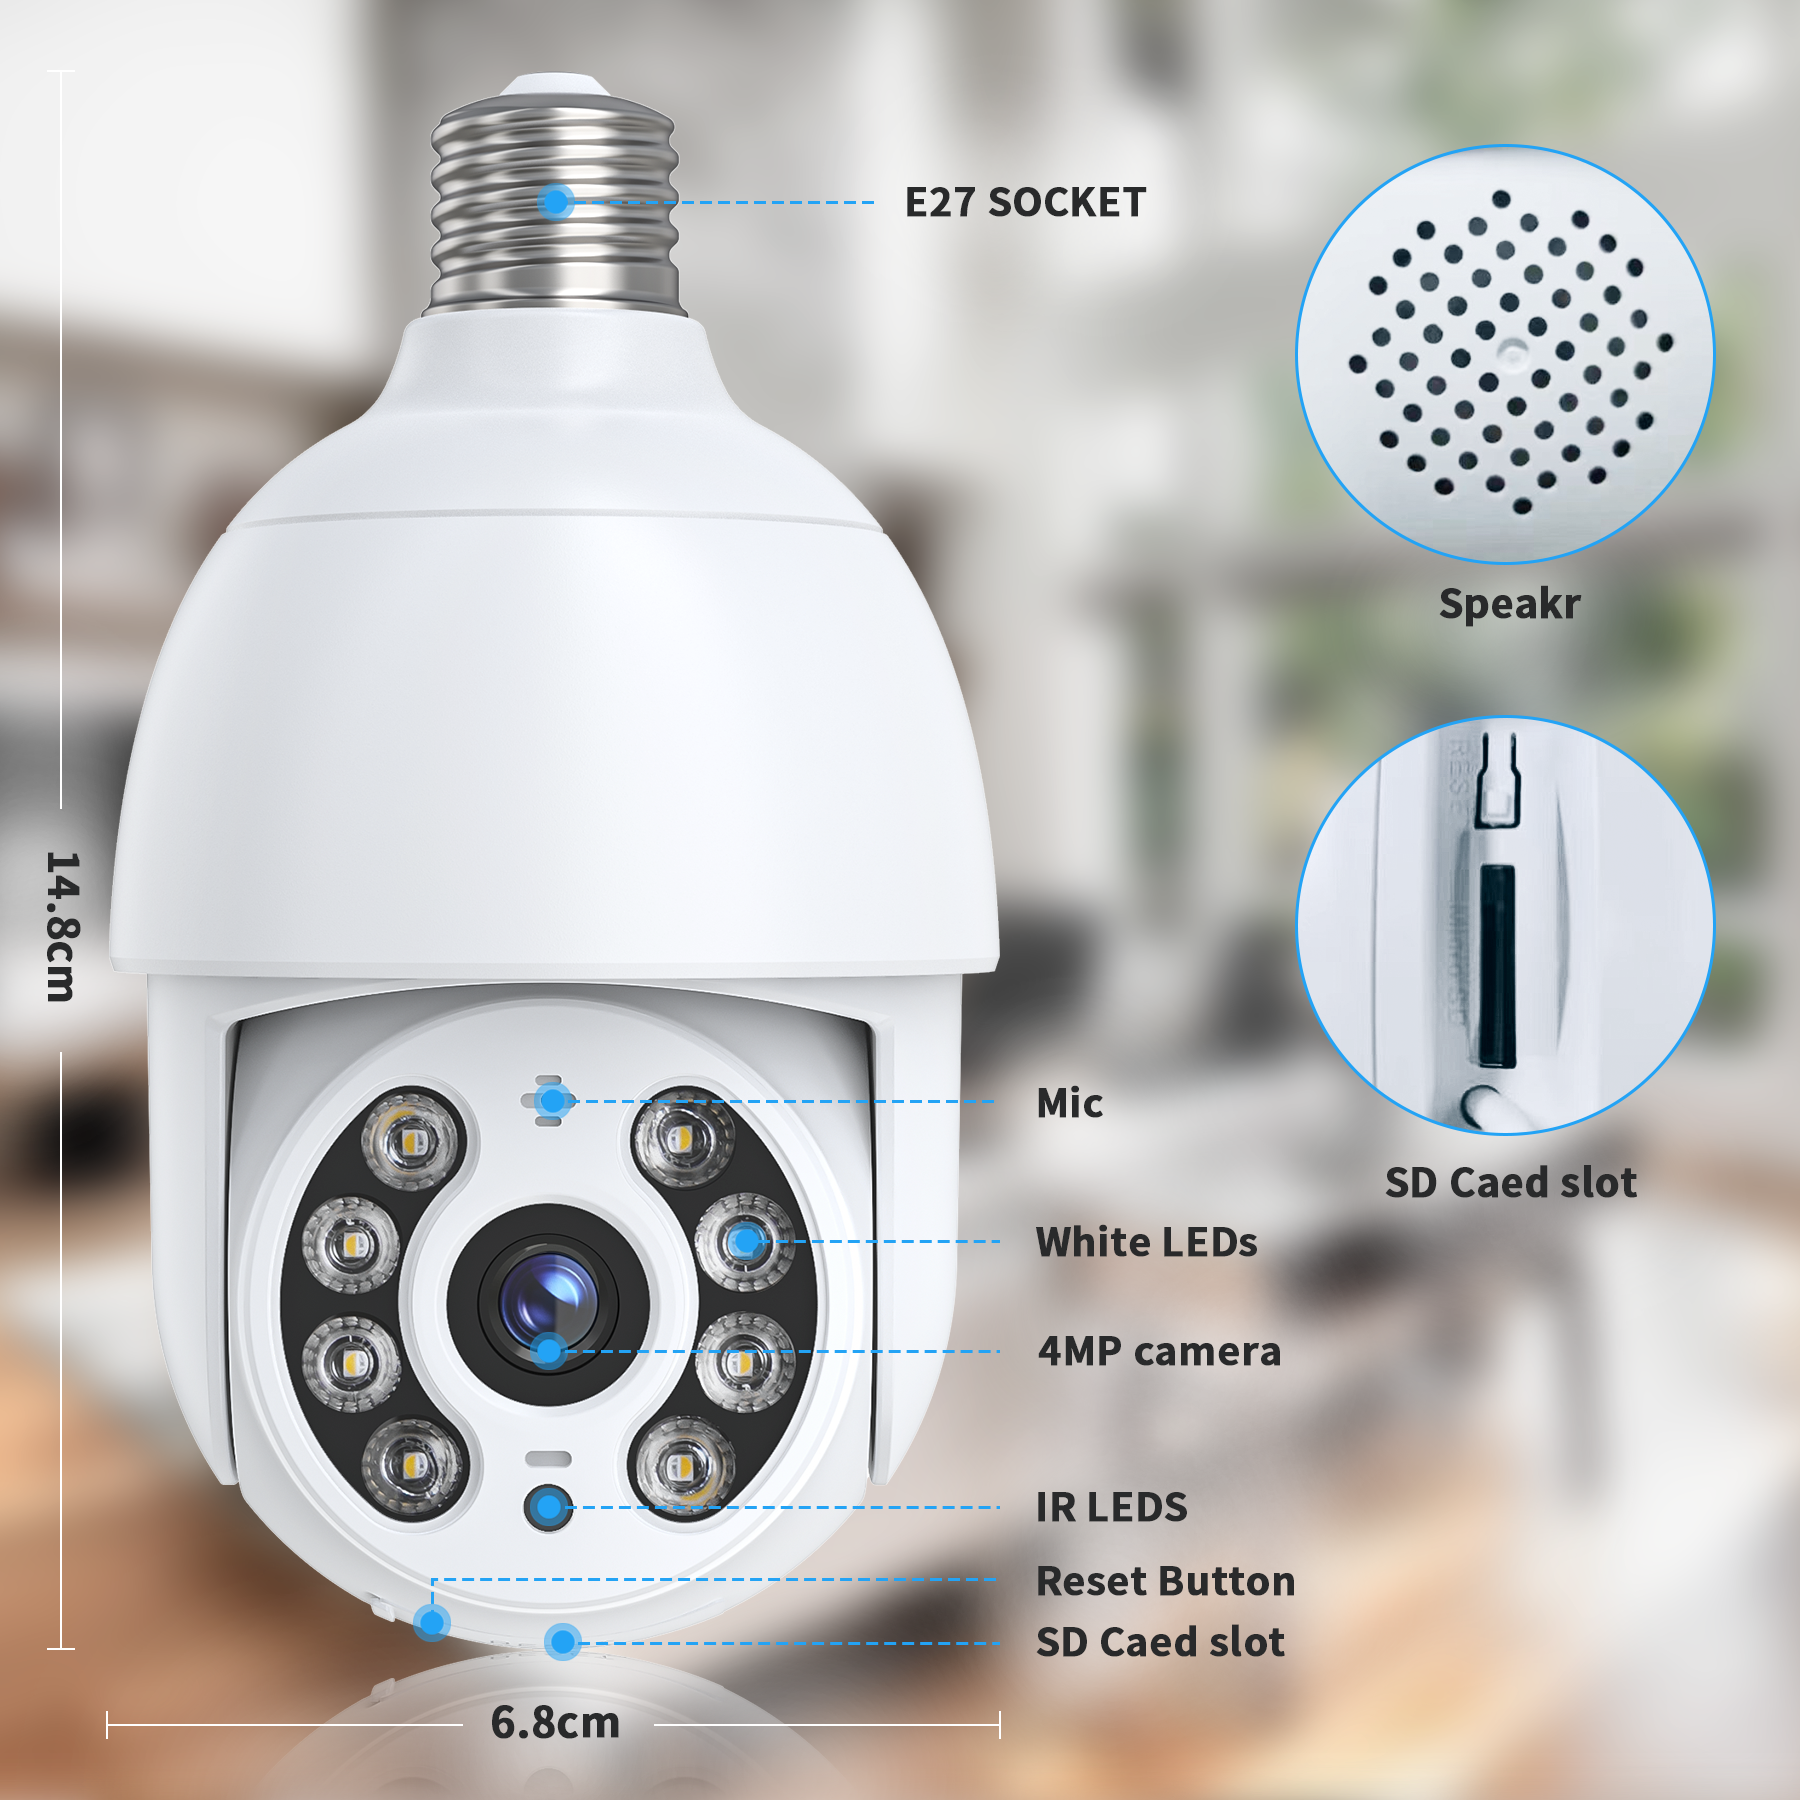  Light Bulb Security Camera Outdoor Wireless WiFi IP65